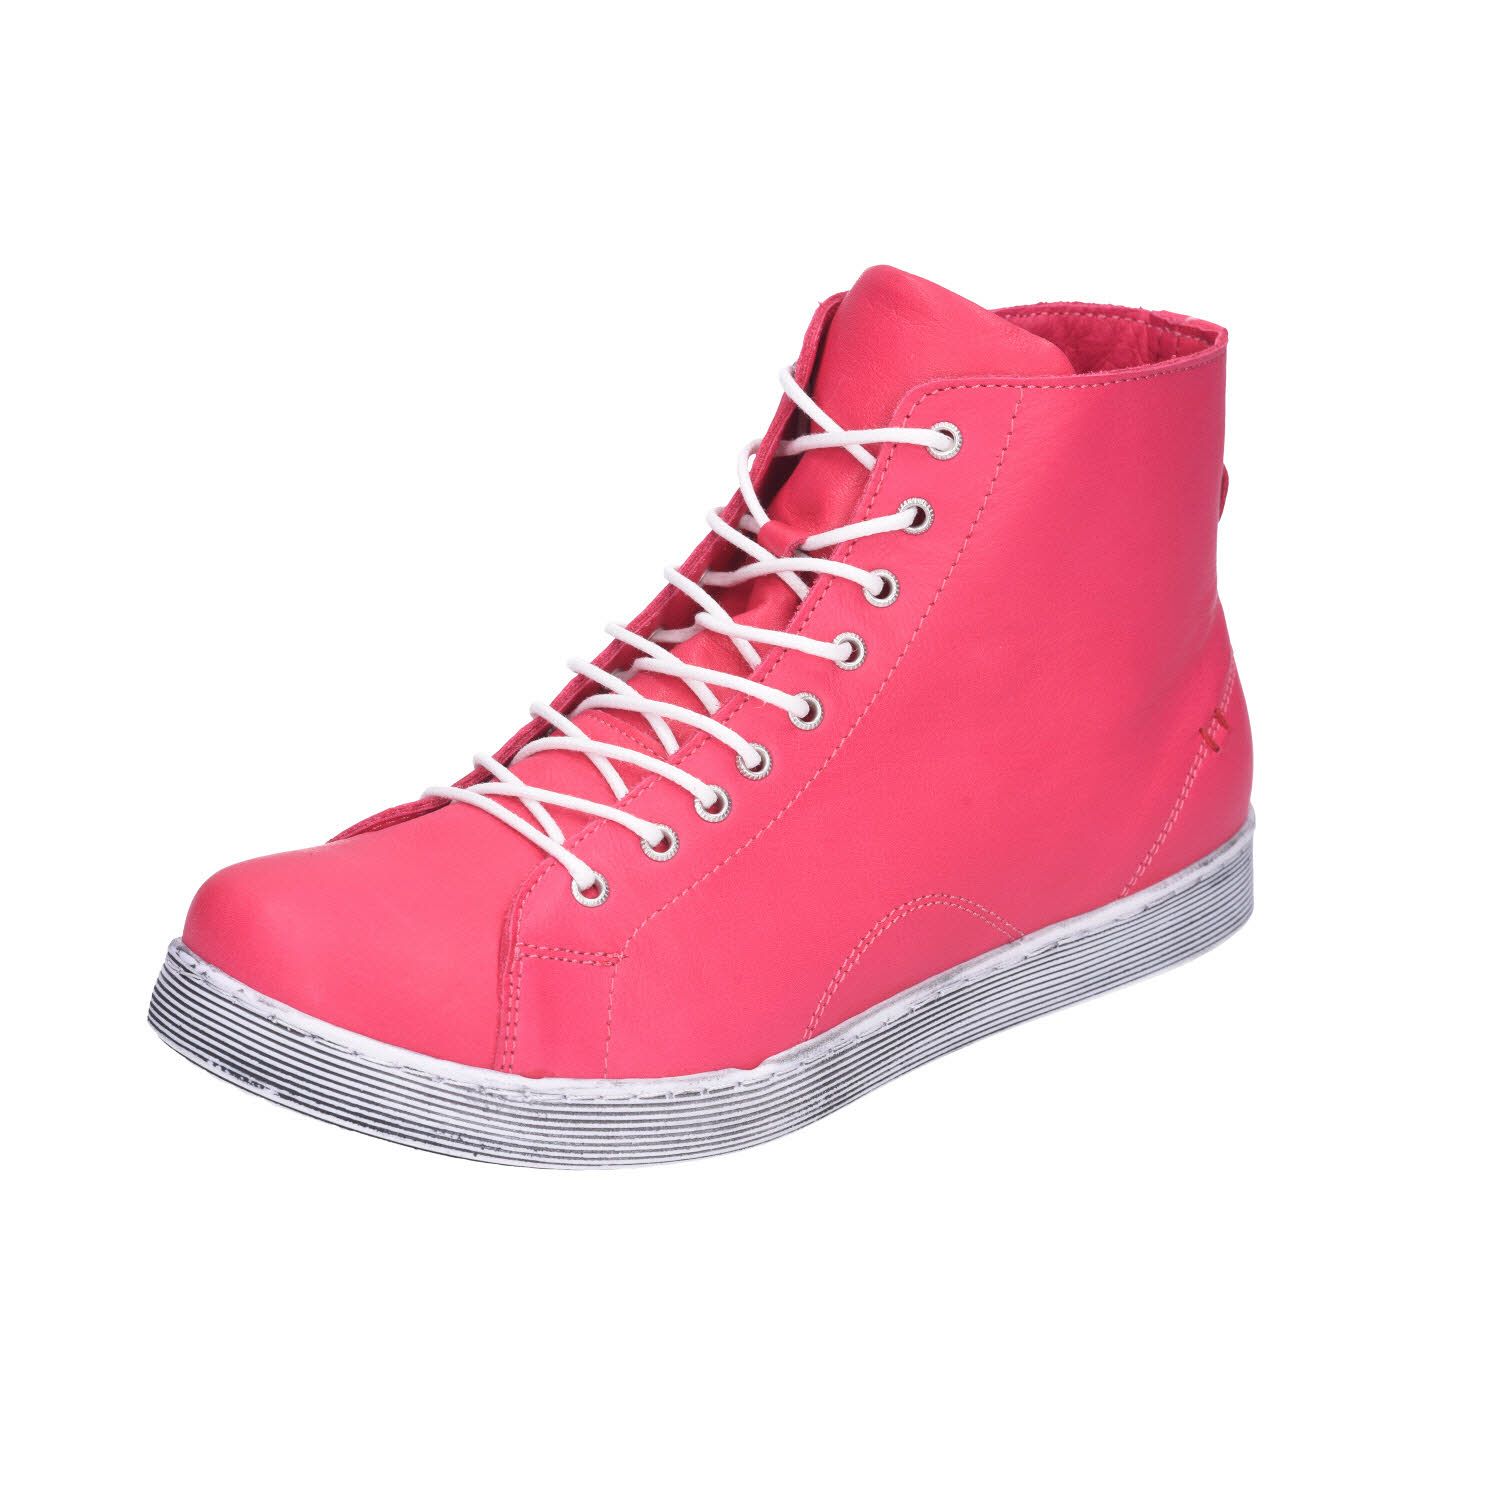 Andrea Conti High Sneaker Magenta pink